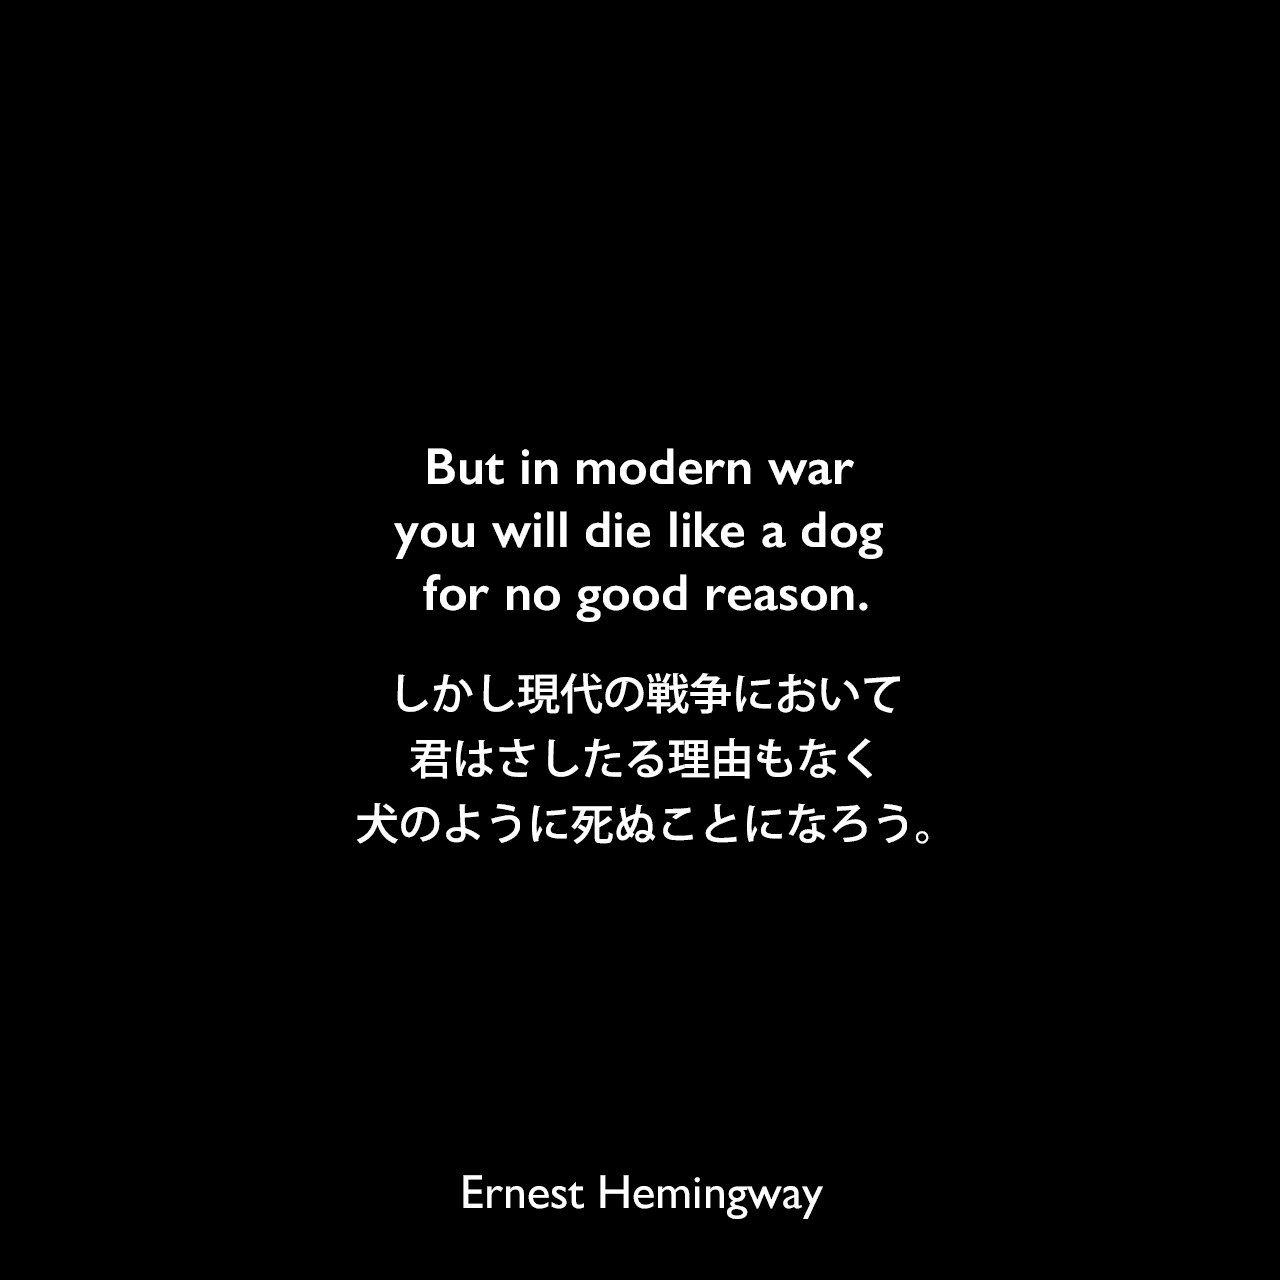 But in modern war you will die like a dog for no good reason.しかし現代の戦争において、君はさしたる理由もなく犬のように死ぬことになろう。Ernest Hemingway